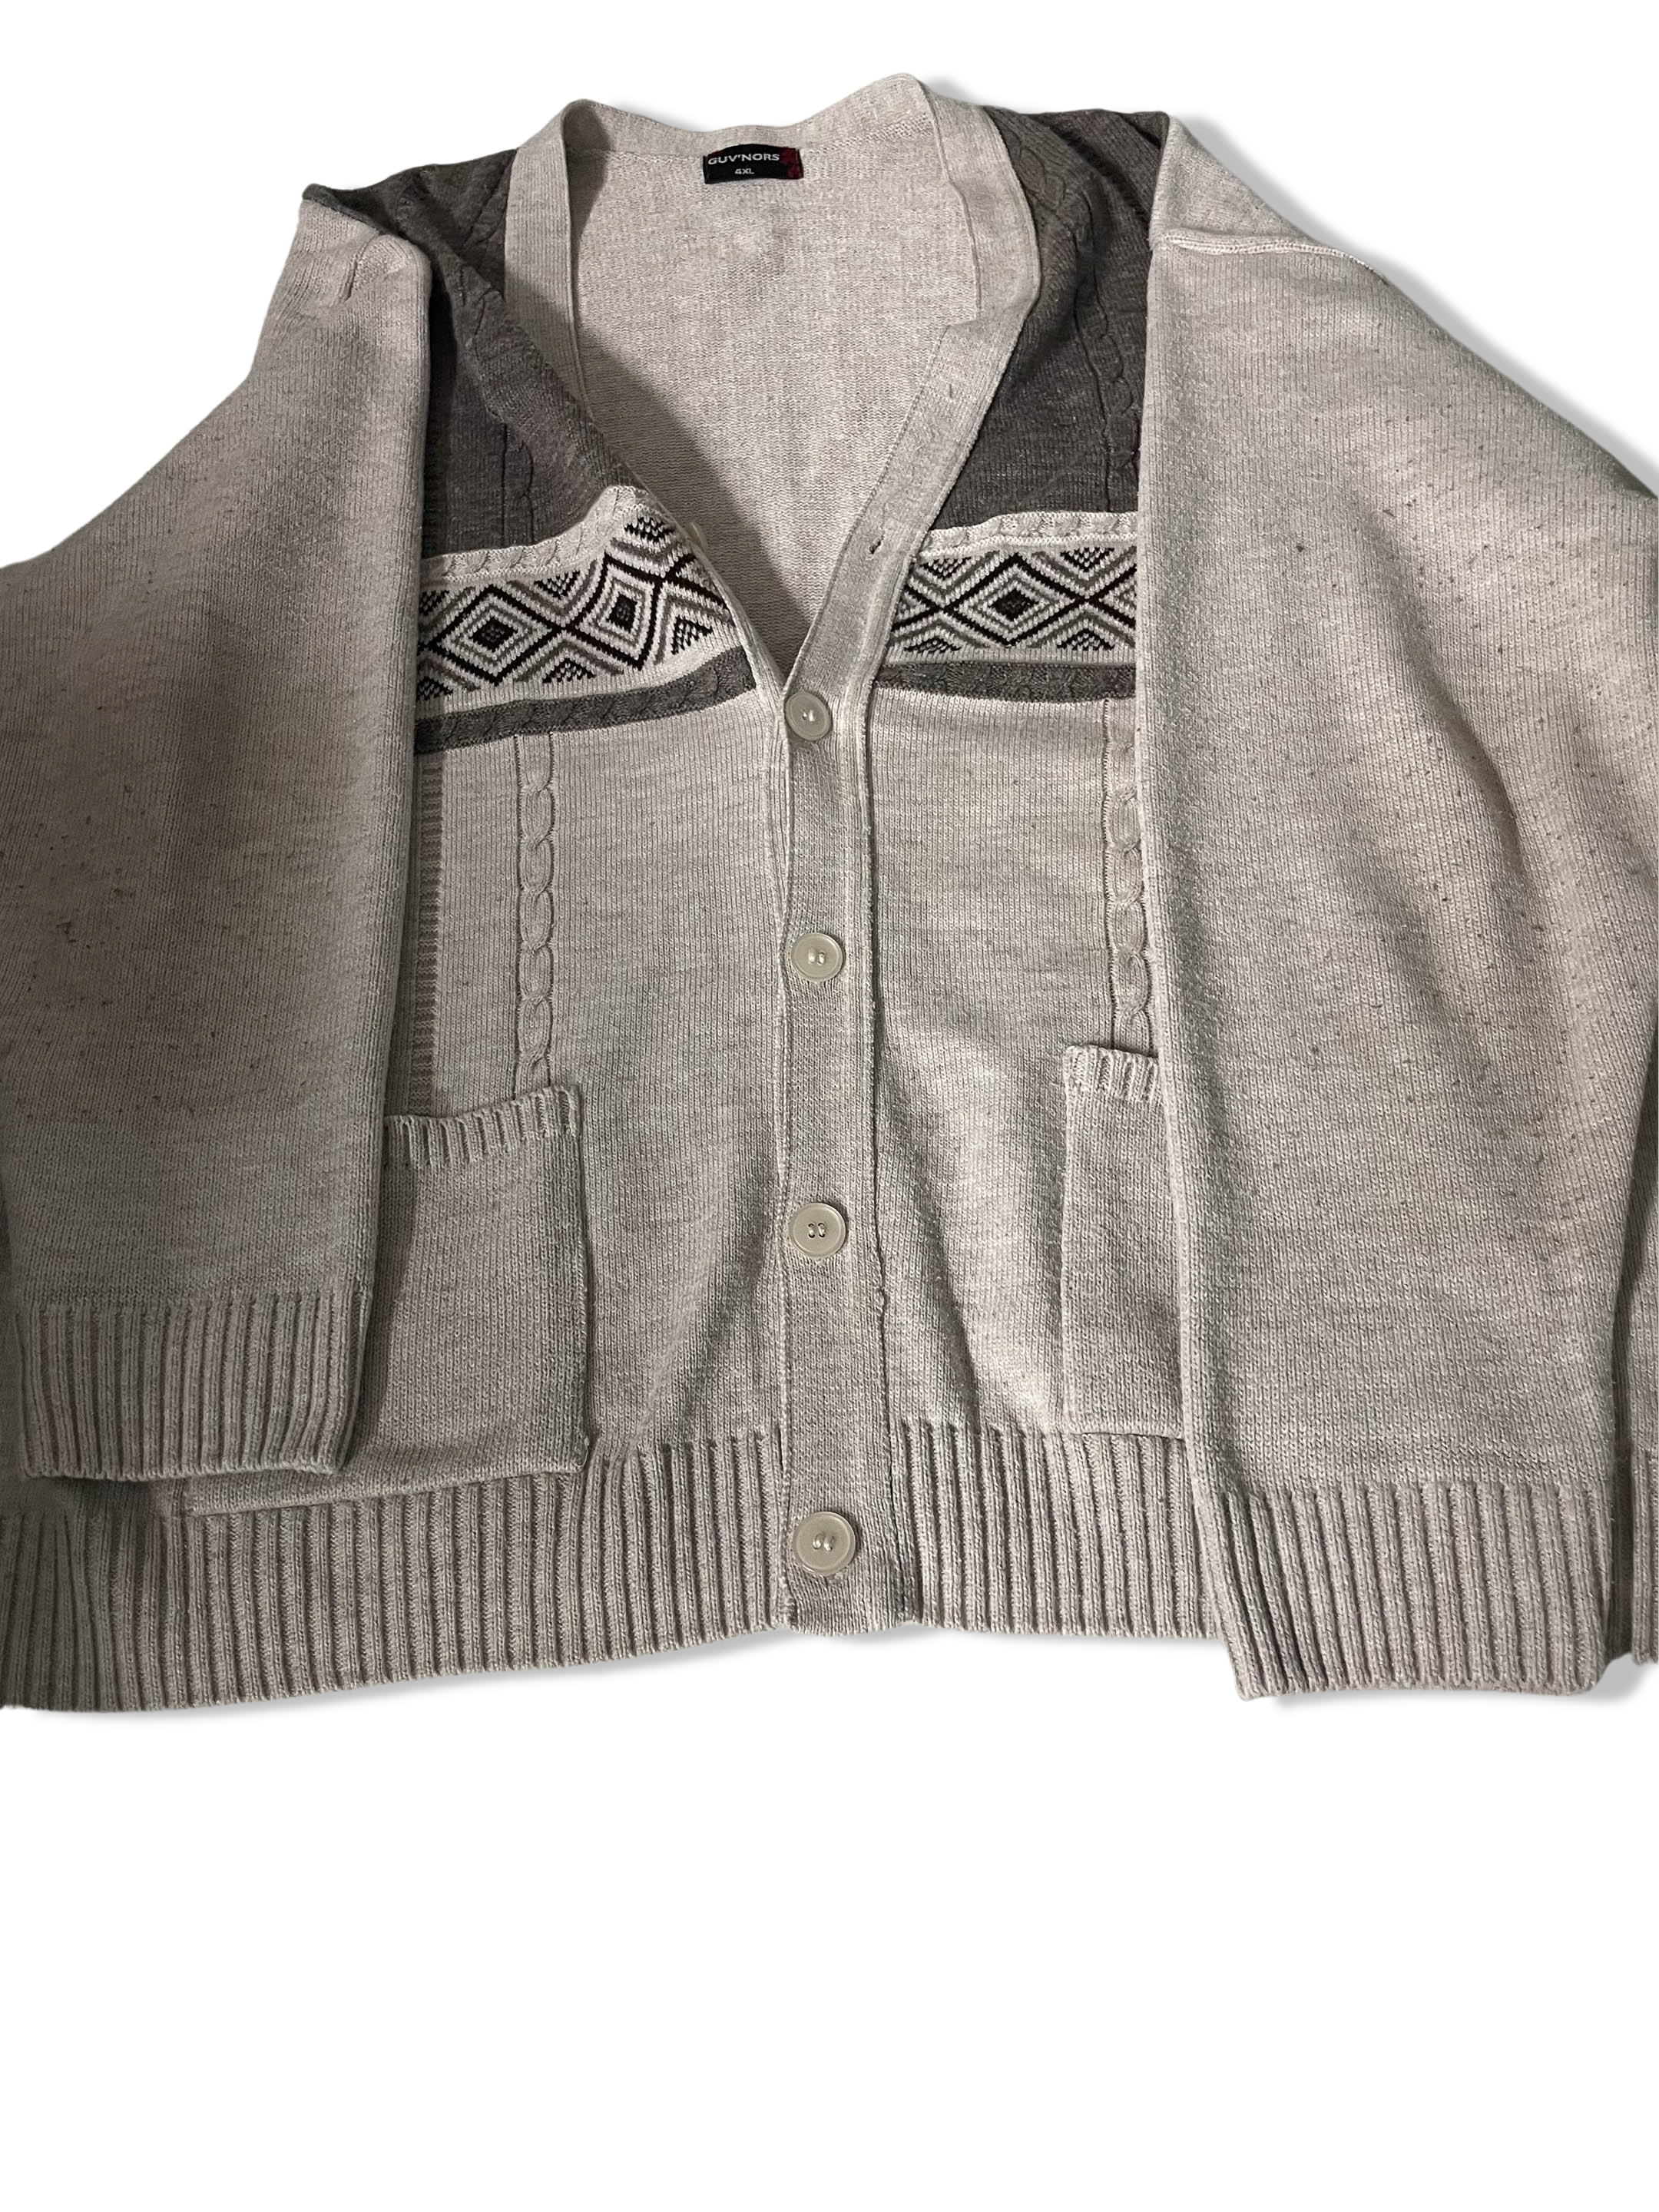 Vintage Giuv'nors grey geometric pattern vneck button up twin pocket heavy jumper 4XL